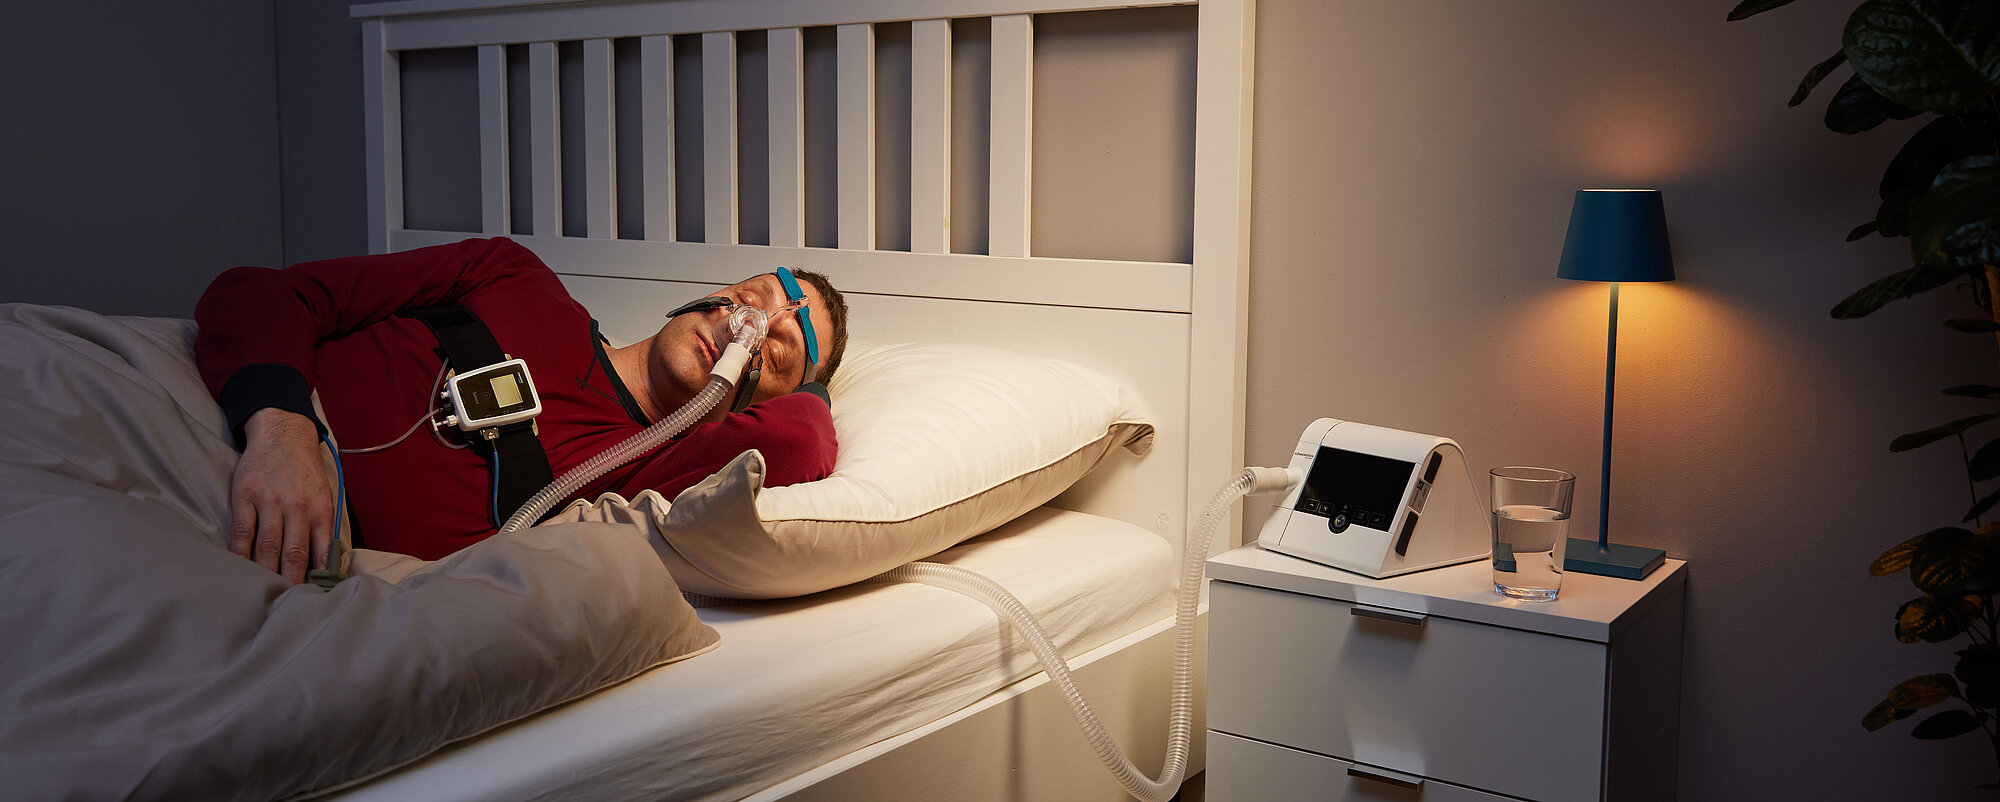 samoa sleep diagnostics device night sleeping mask nasal far